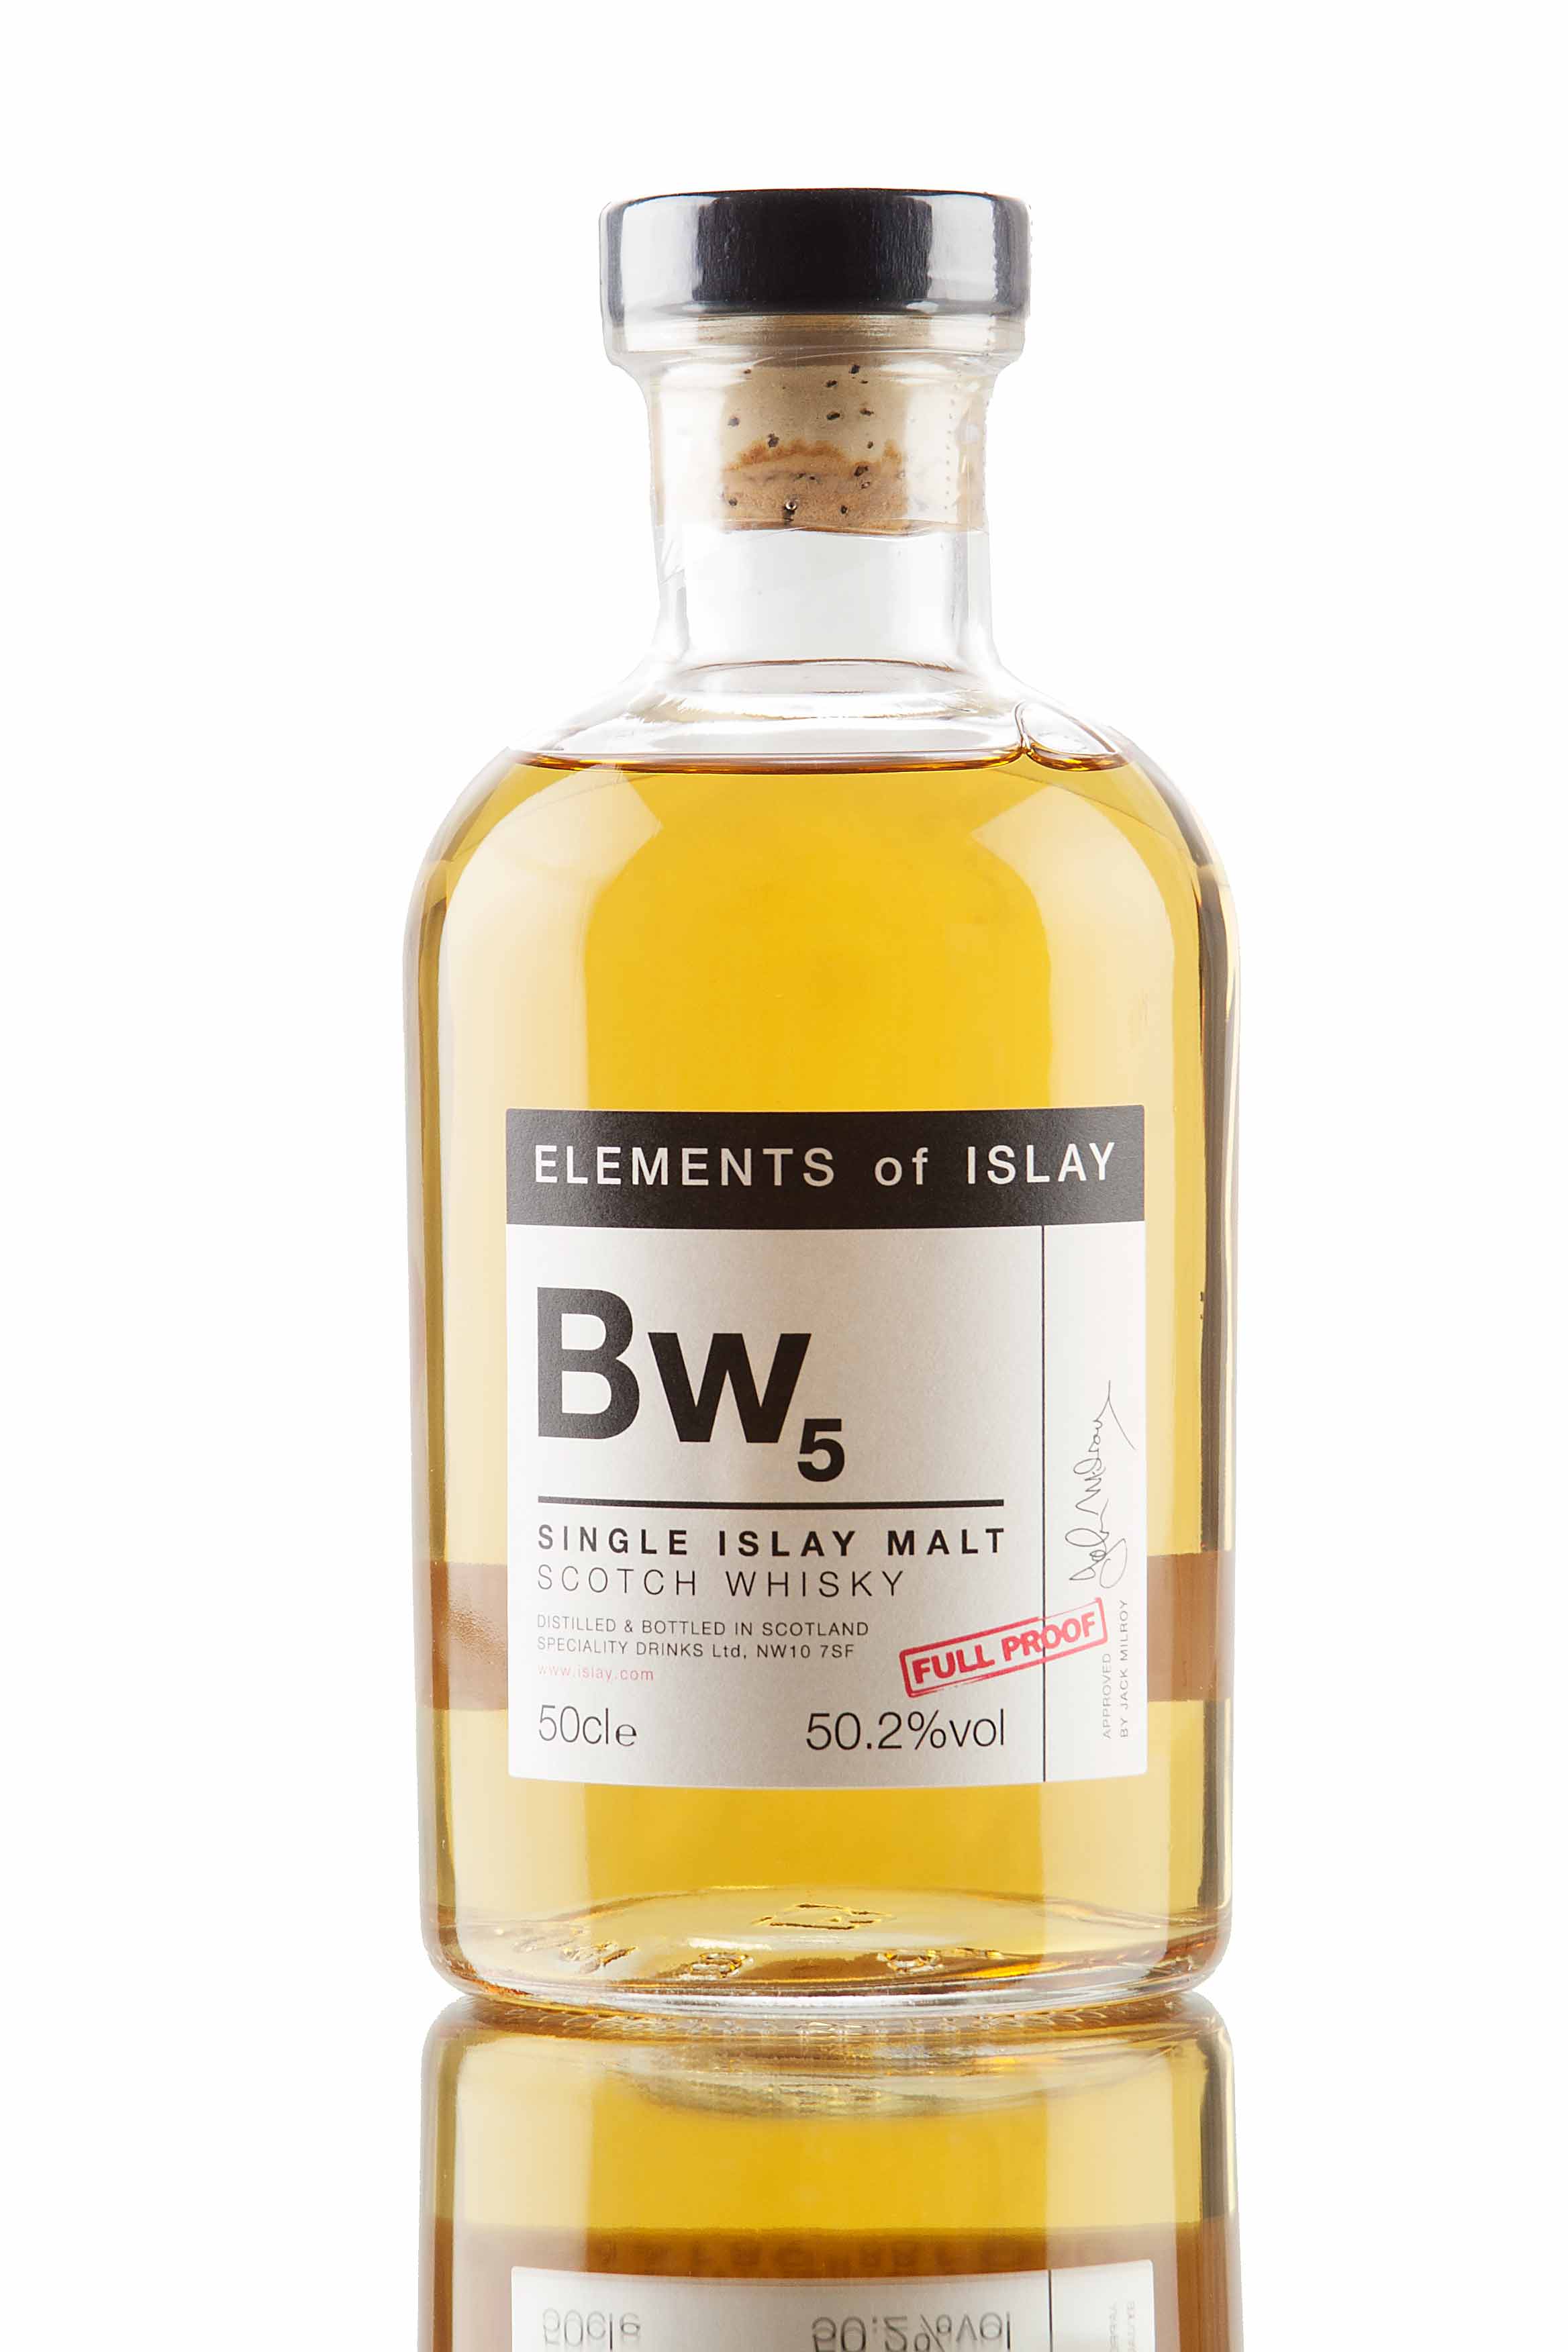 BW5 - Elements of Islay (Bowmore)